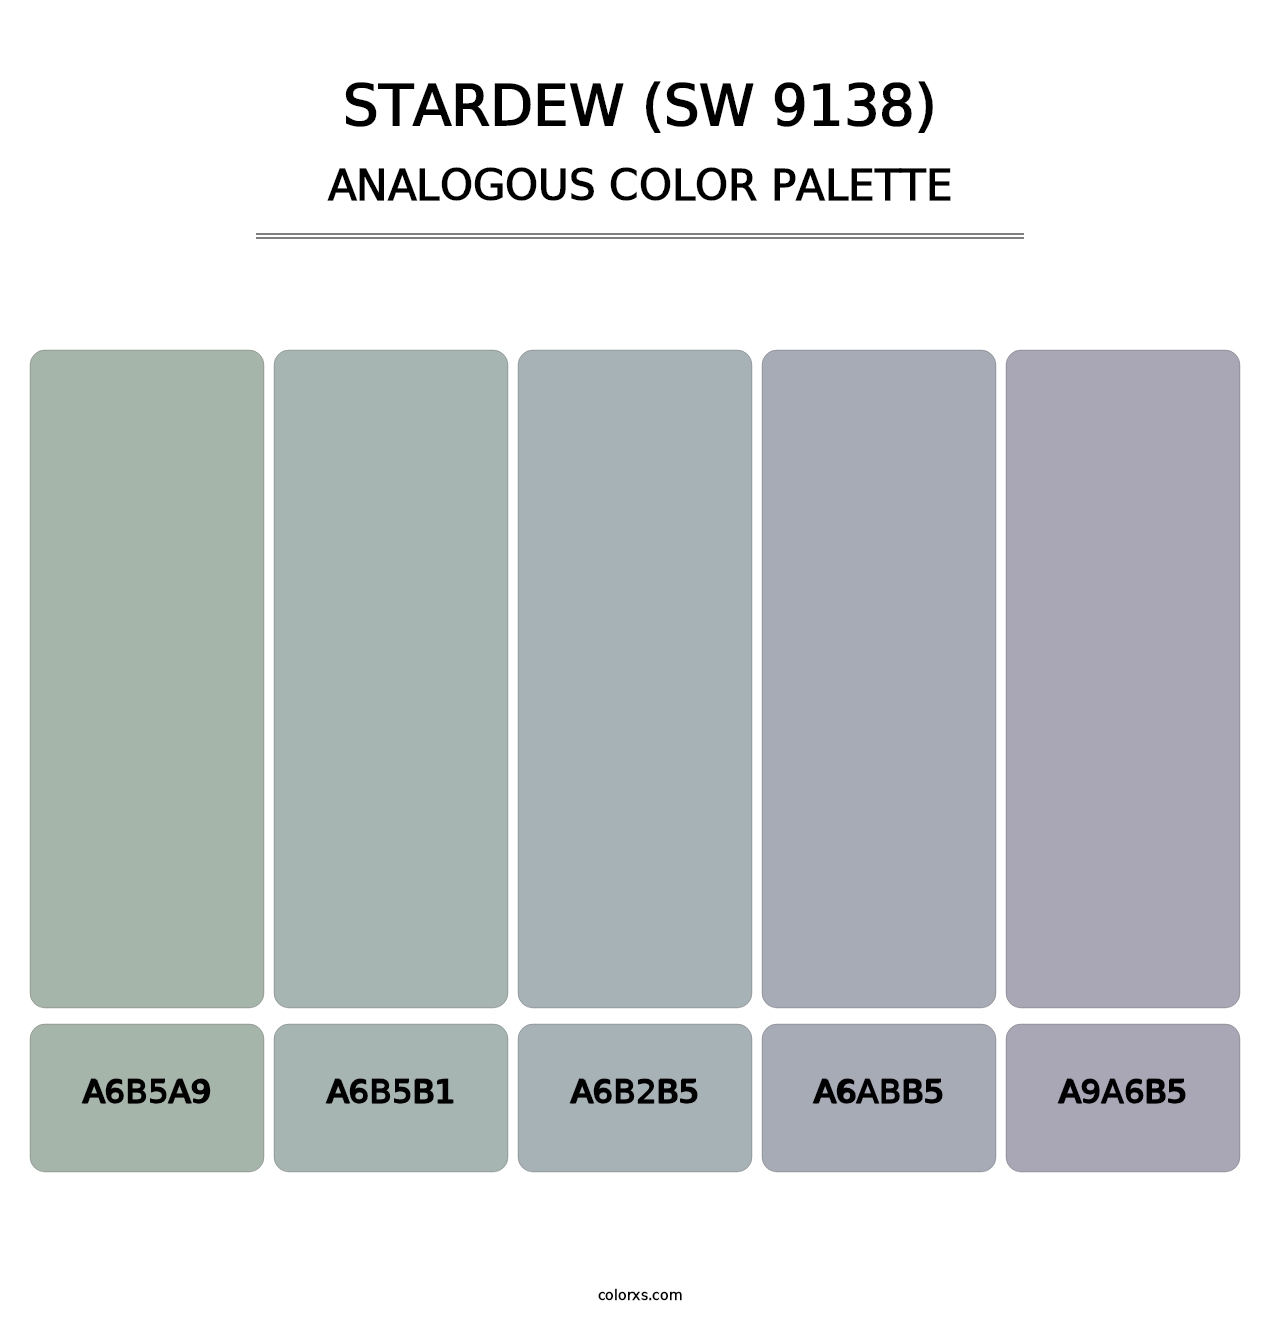 Stardew (SW 9138) - Analogous Color Palette